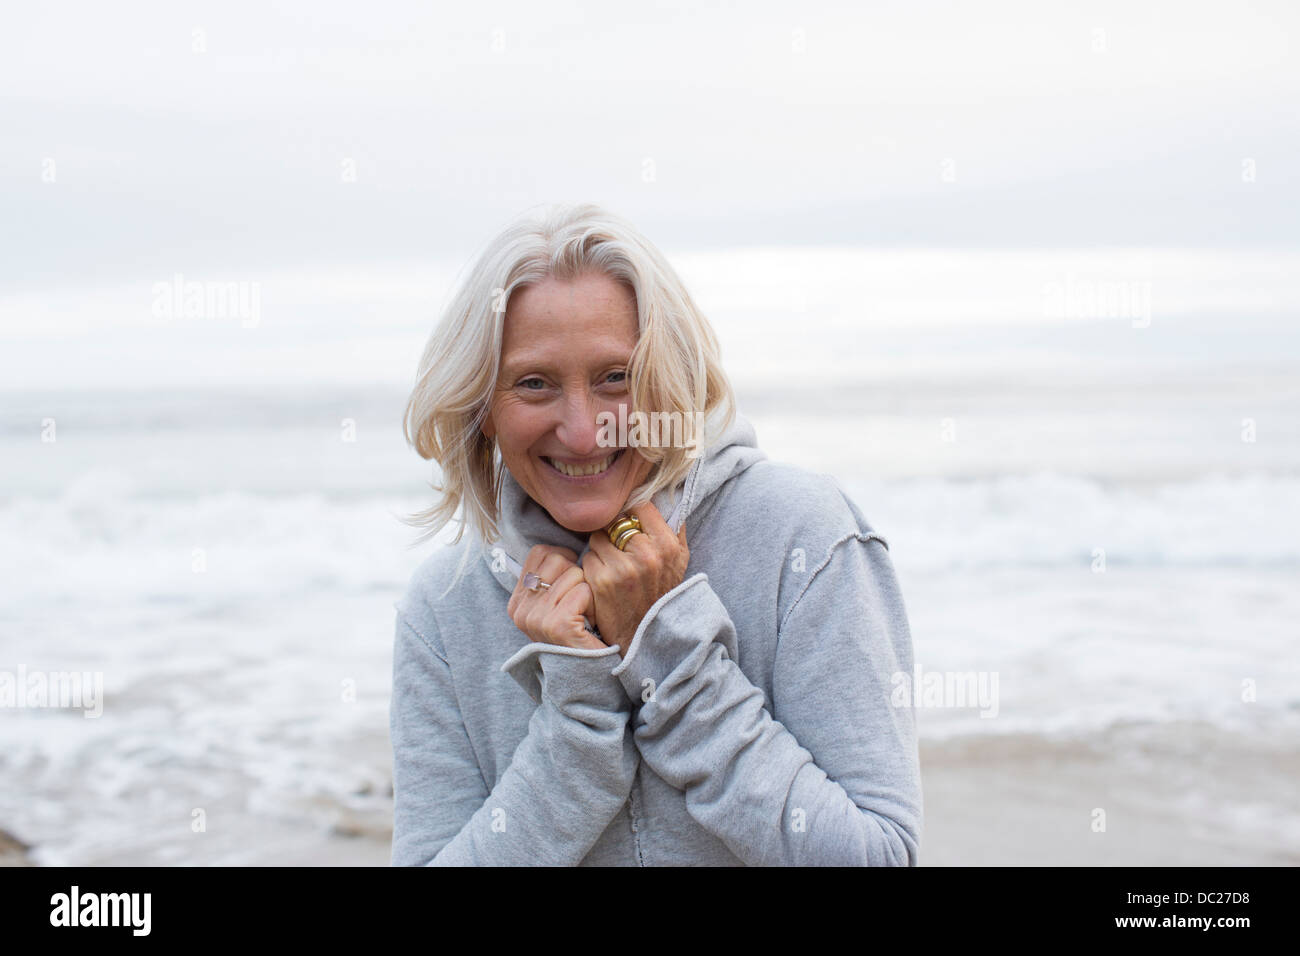 Mature woman wearing grey sweater on beach, smiling Stock Photo